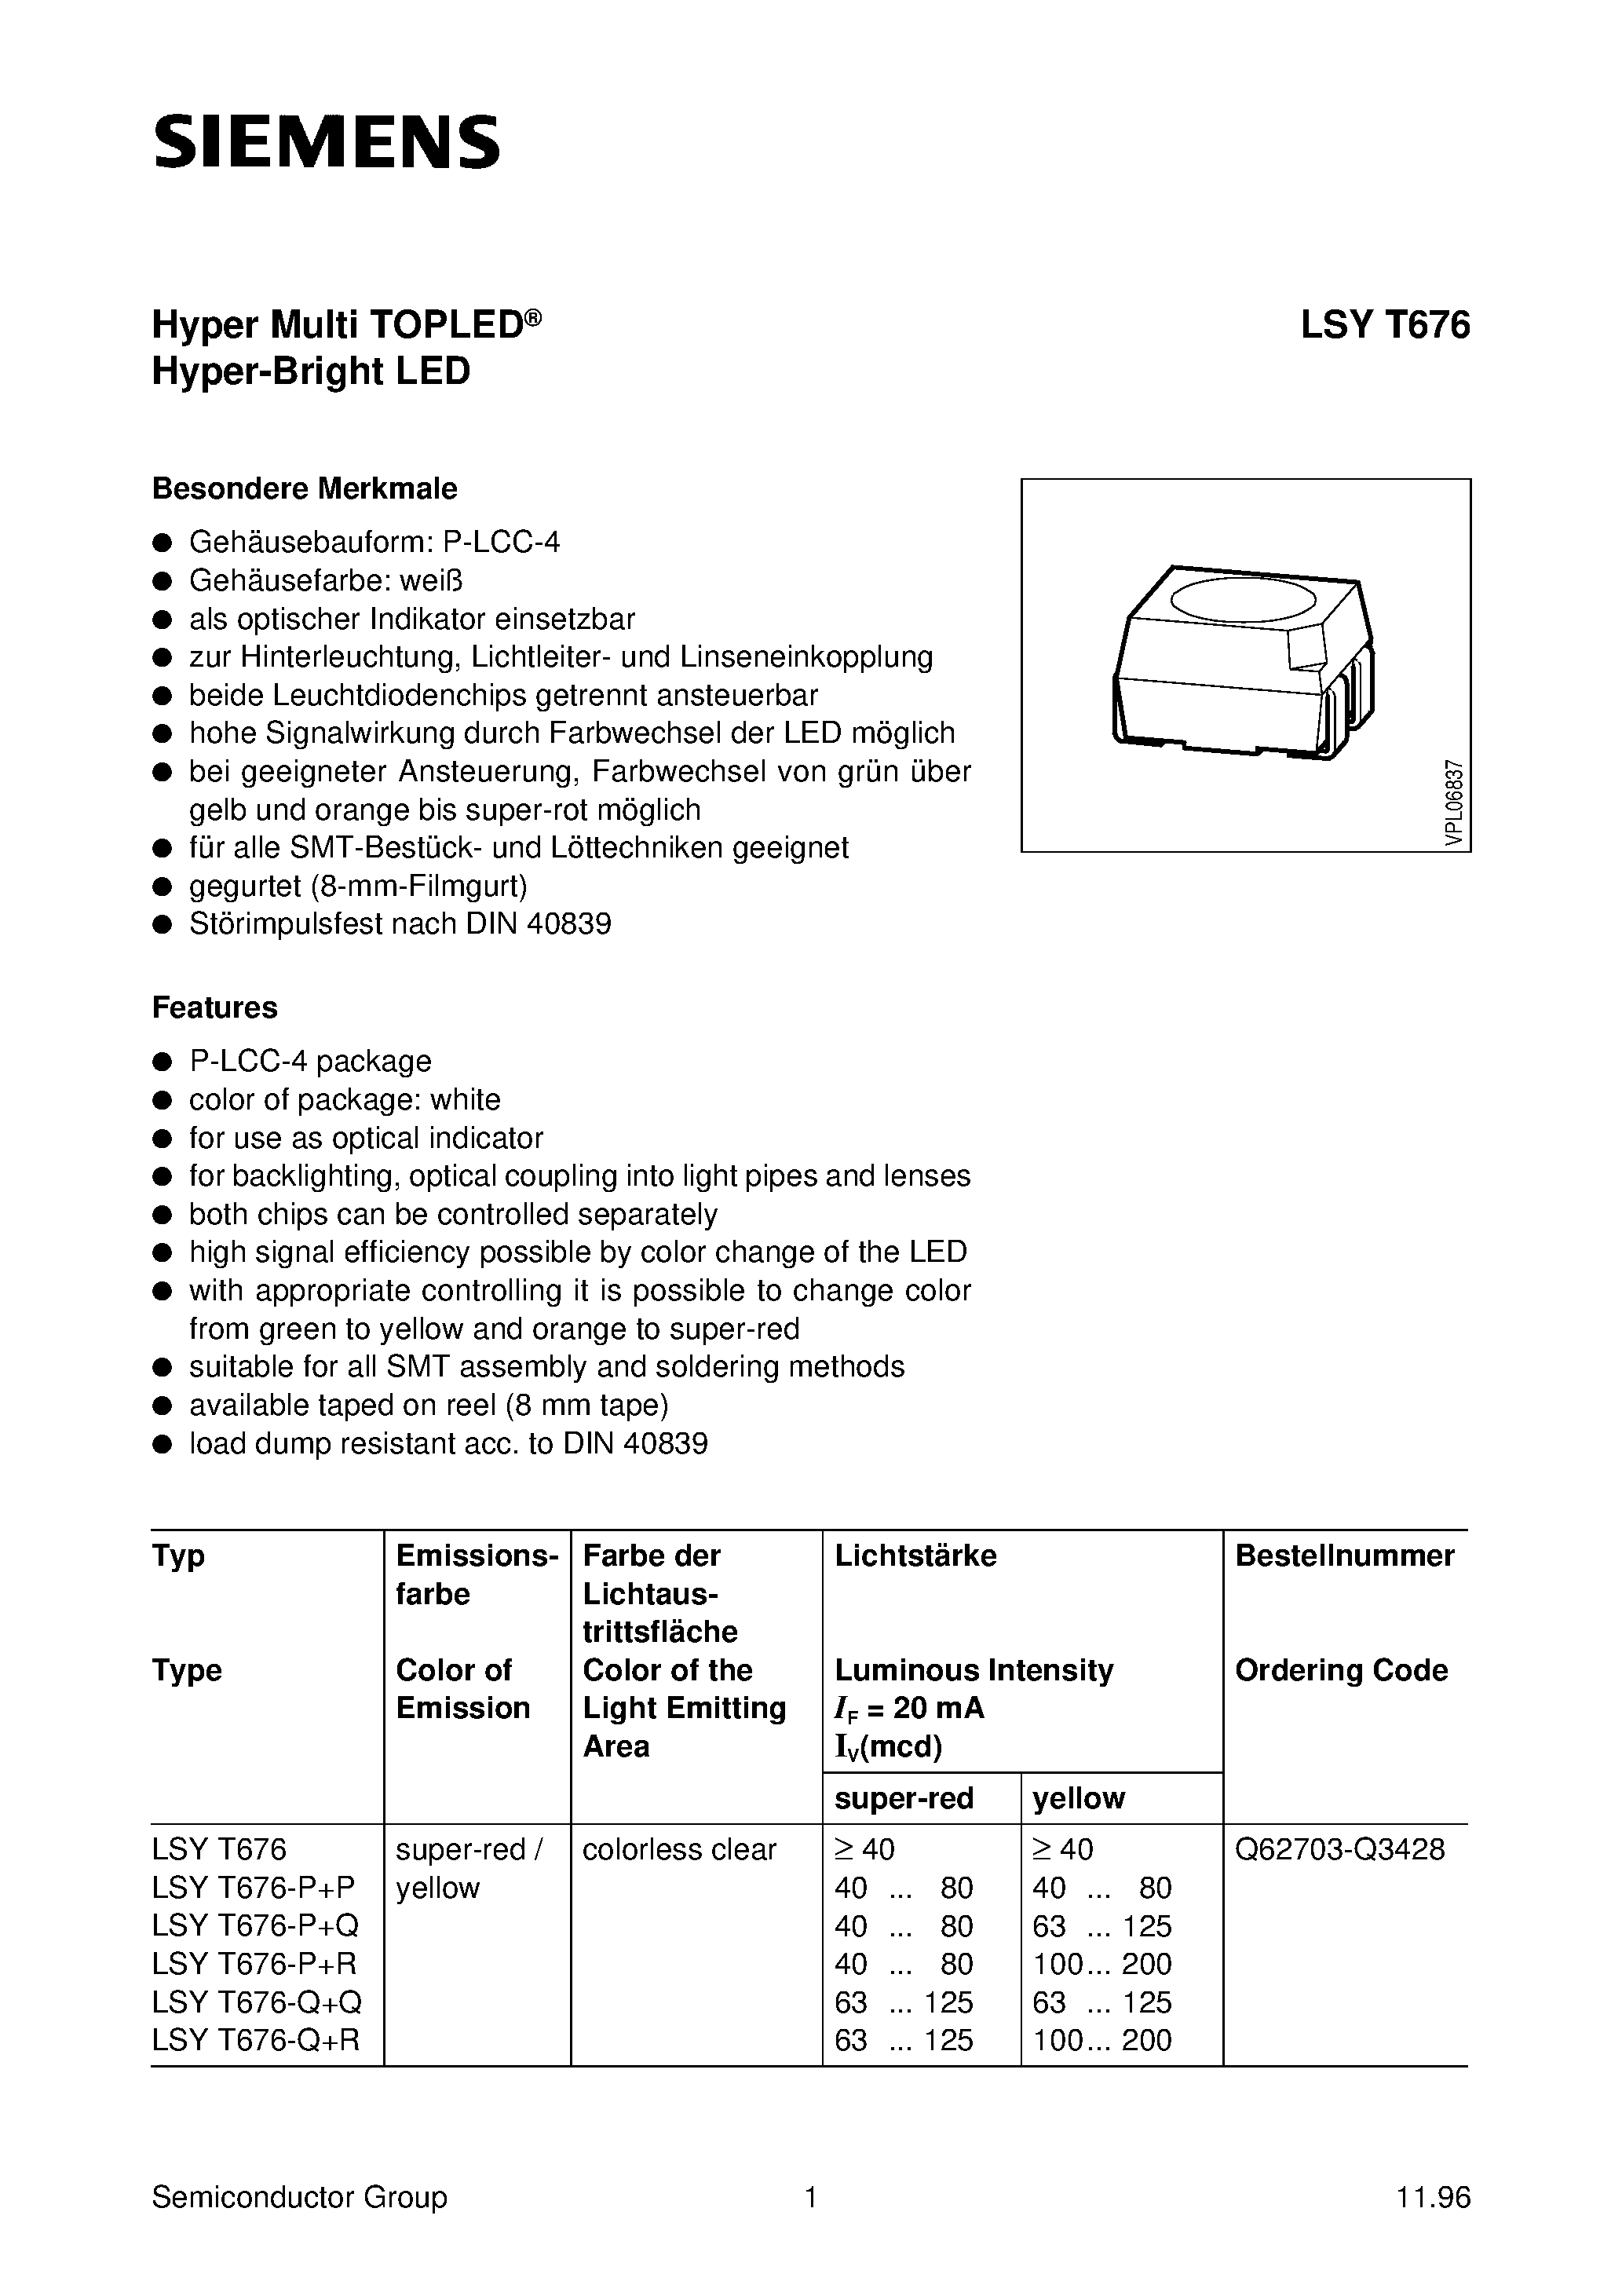 Даташит LSYT676-P+Q - Hyper Multi TOPLED Hyper-Bright LED страница 1